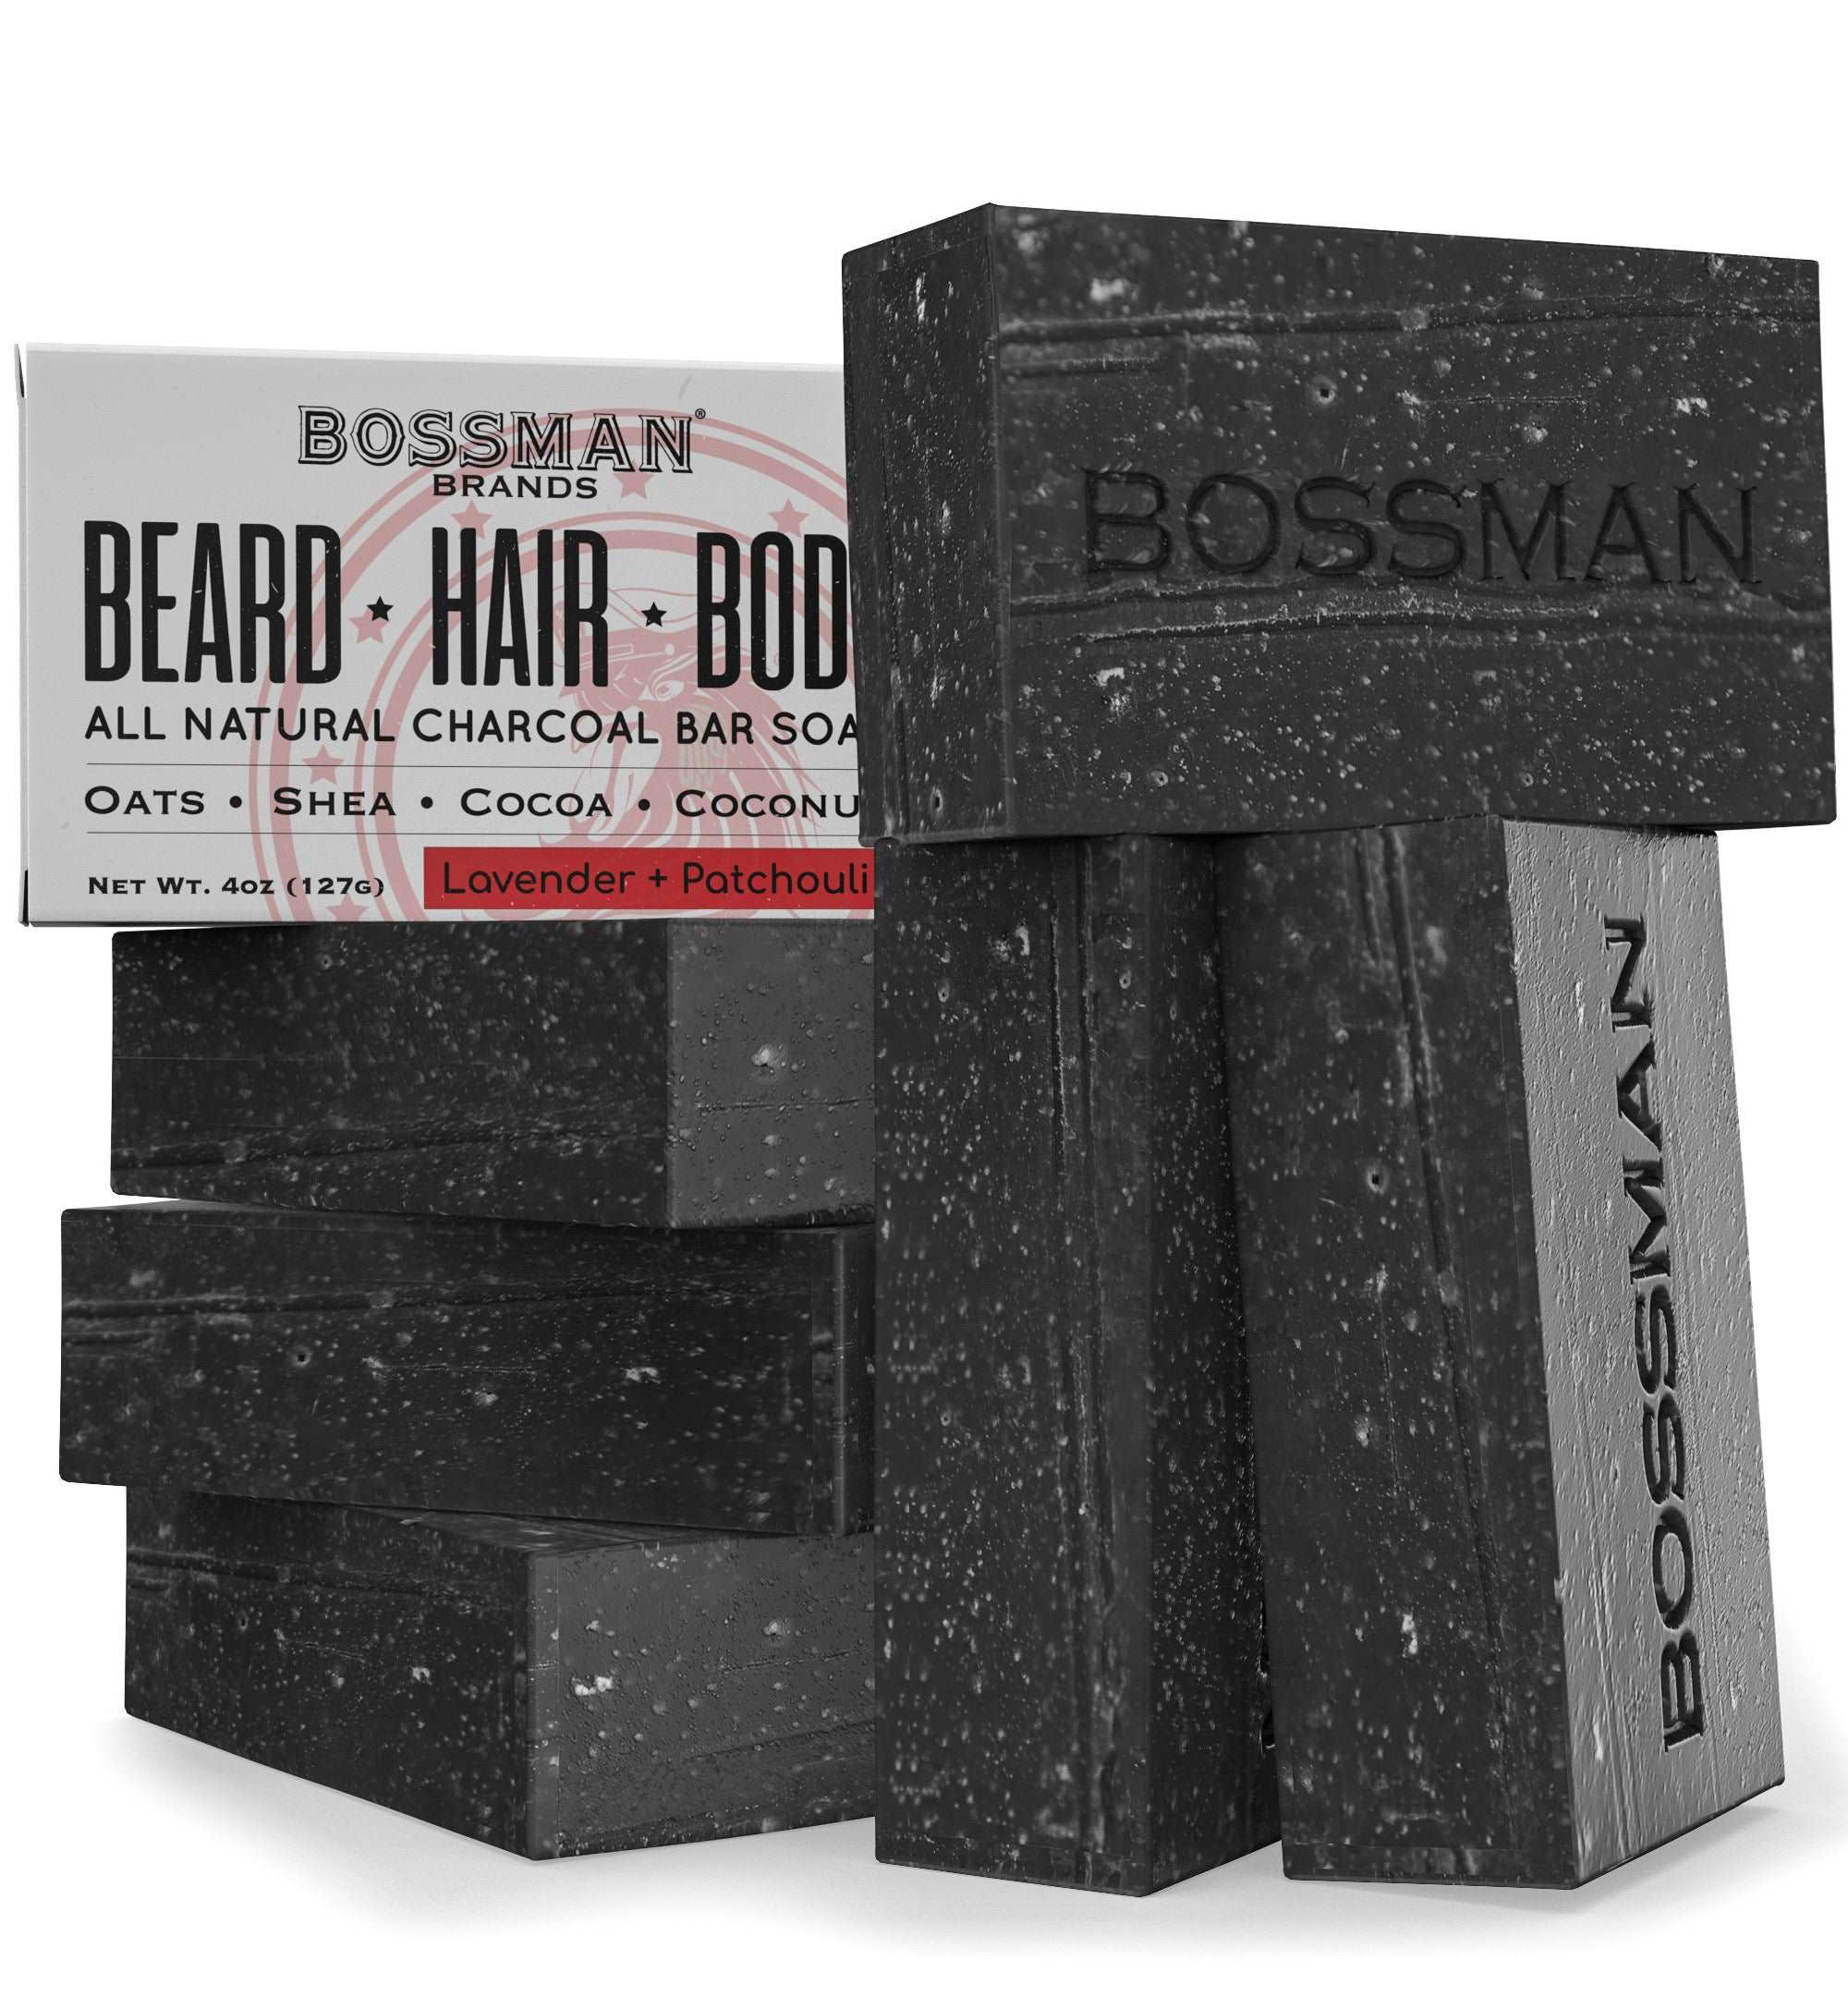 All Natural Exfoliating Beard, Hair & Body Bar Soap Bossman Brands